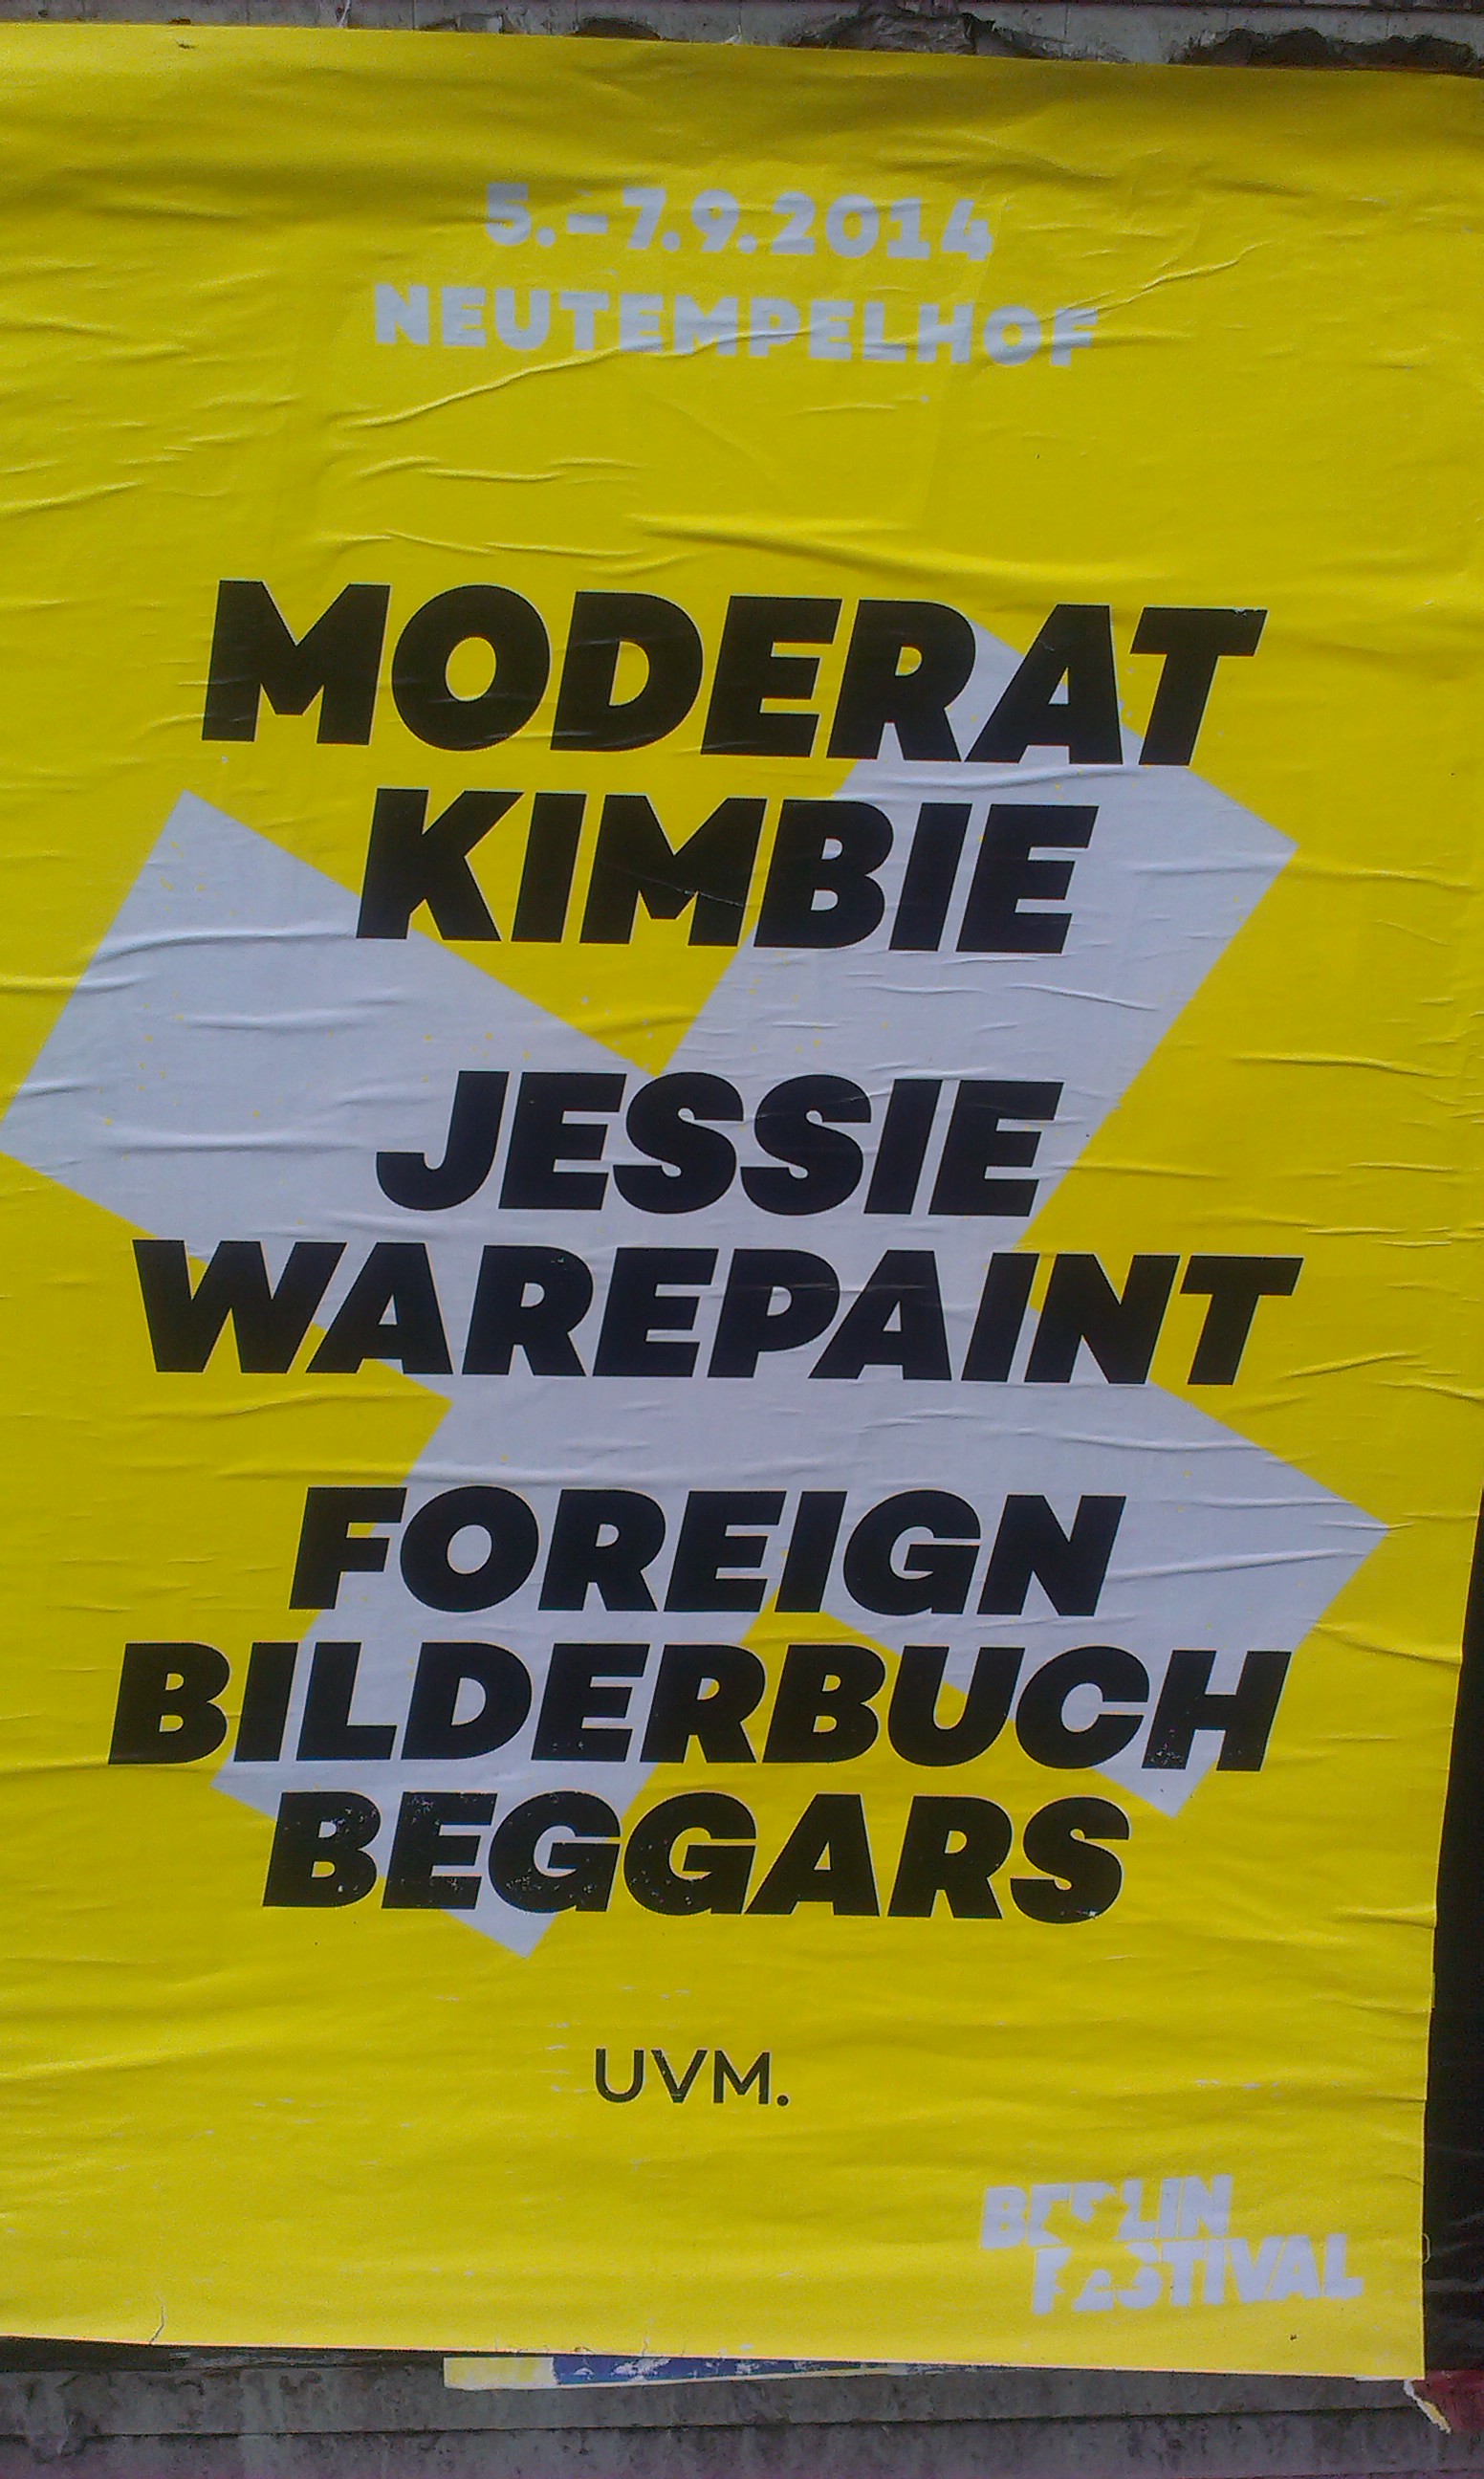 Berlin Festival: Editors, Woodkid, K.I.Z und viele andere